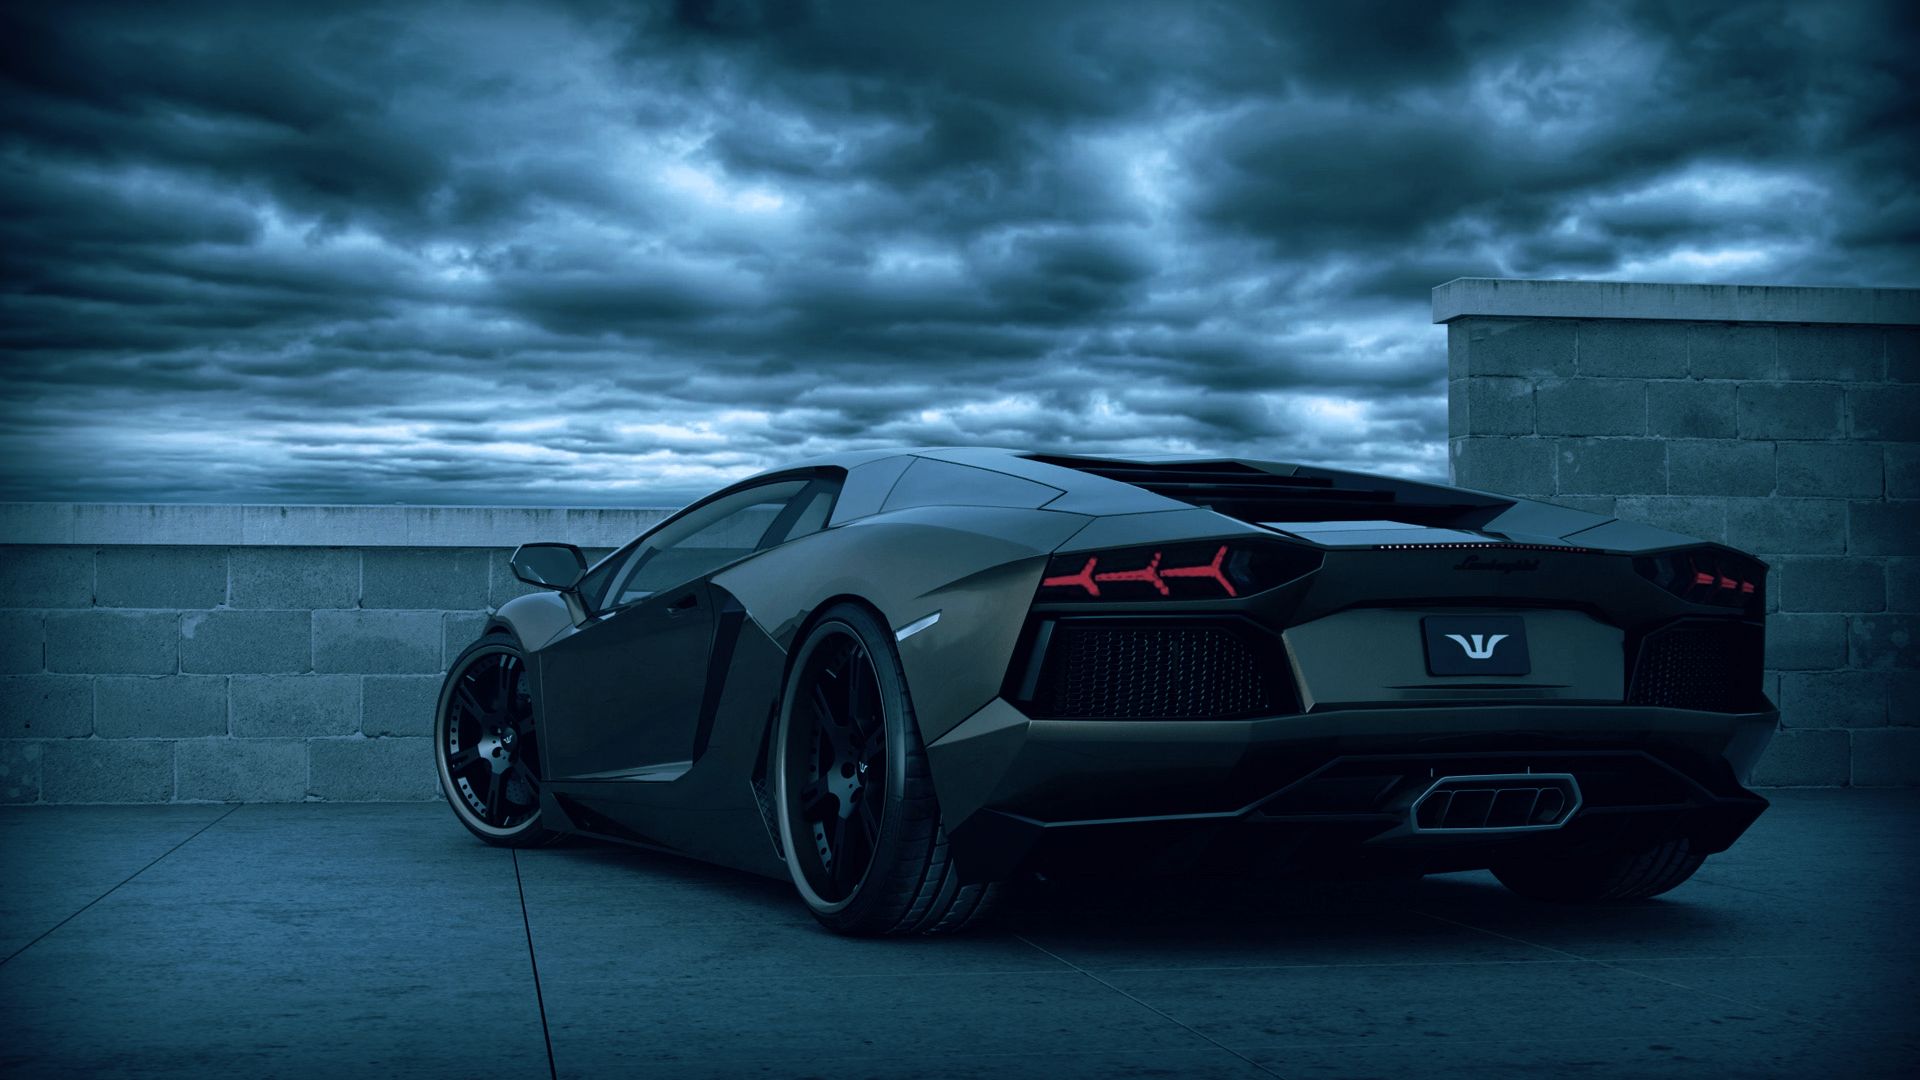 Lamborghini dark wallpapers hd